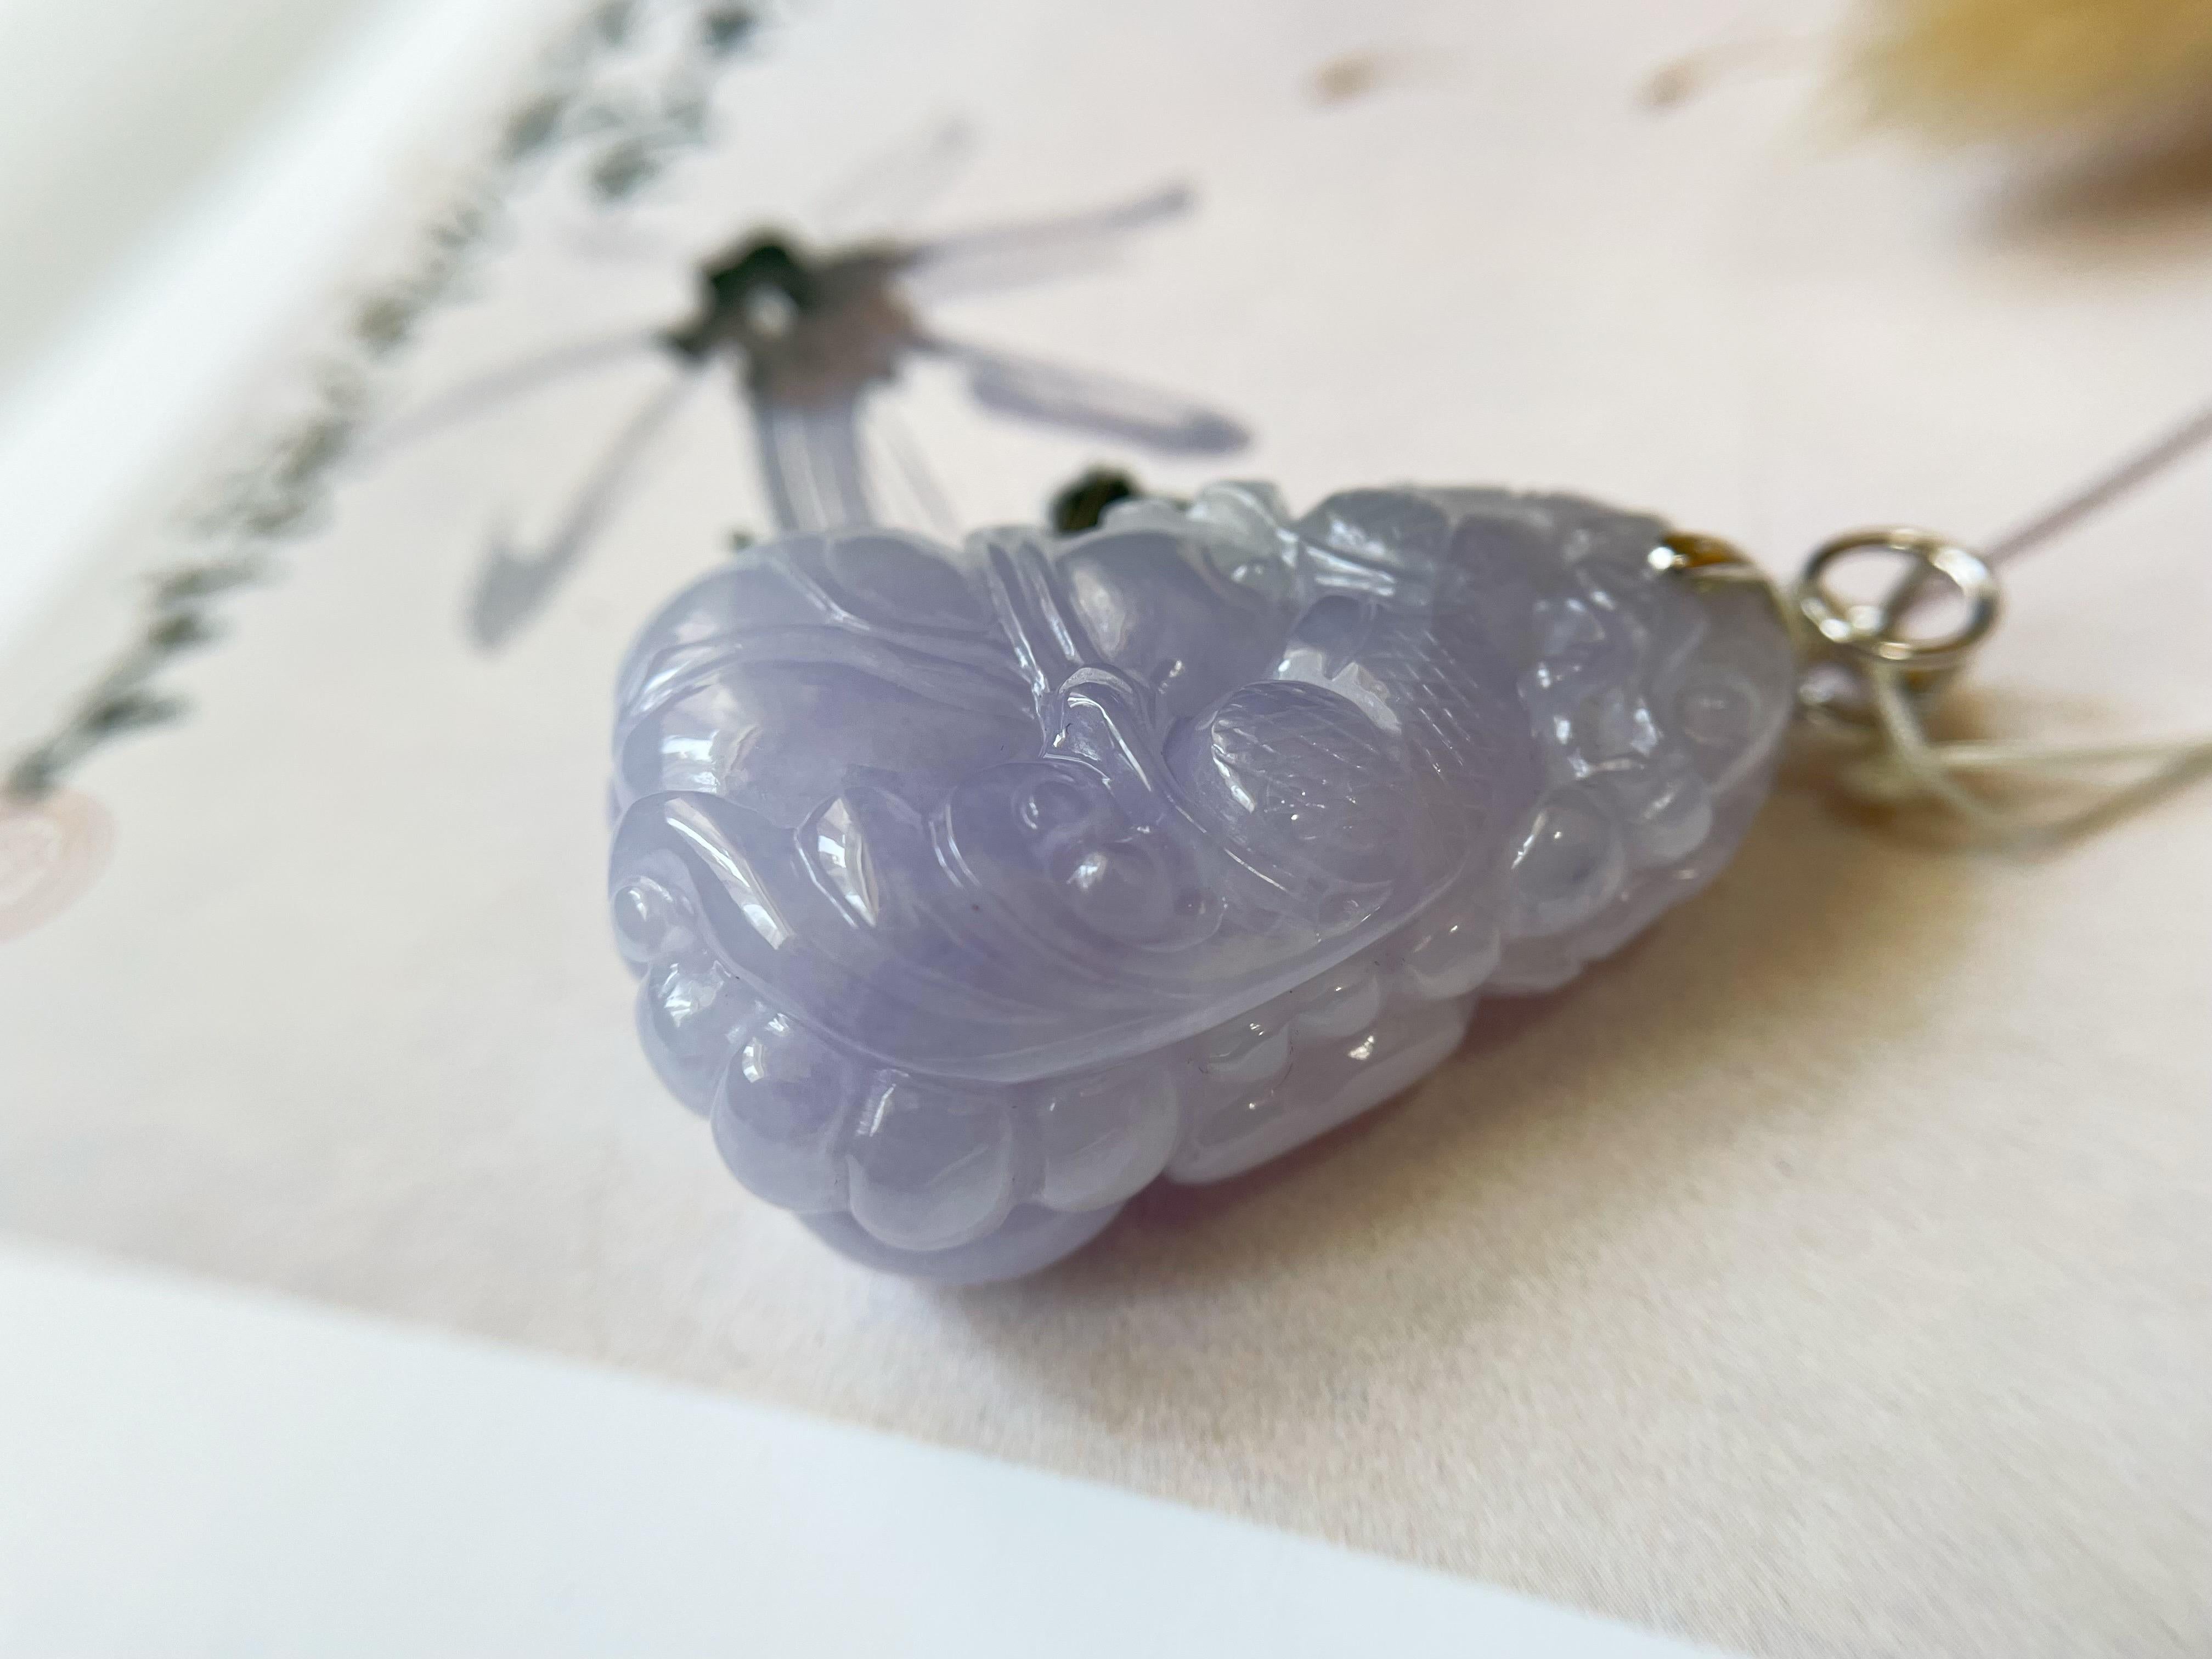 lavender jade pendant